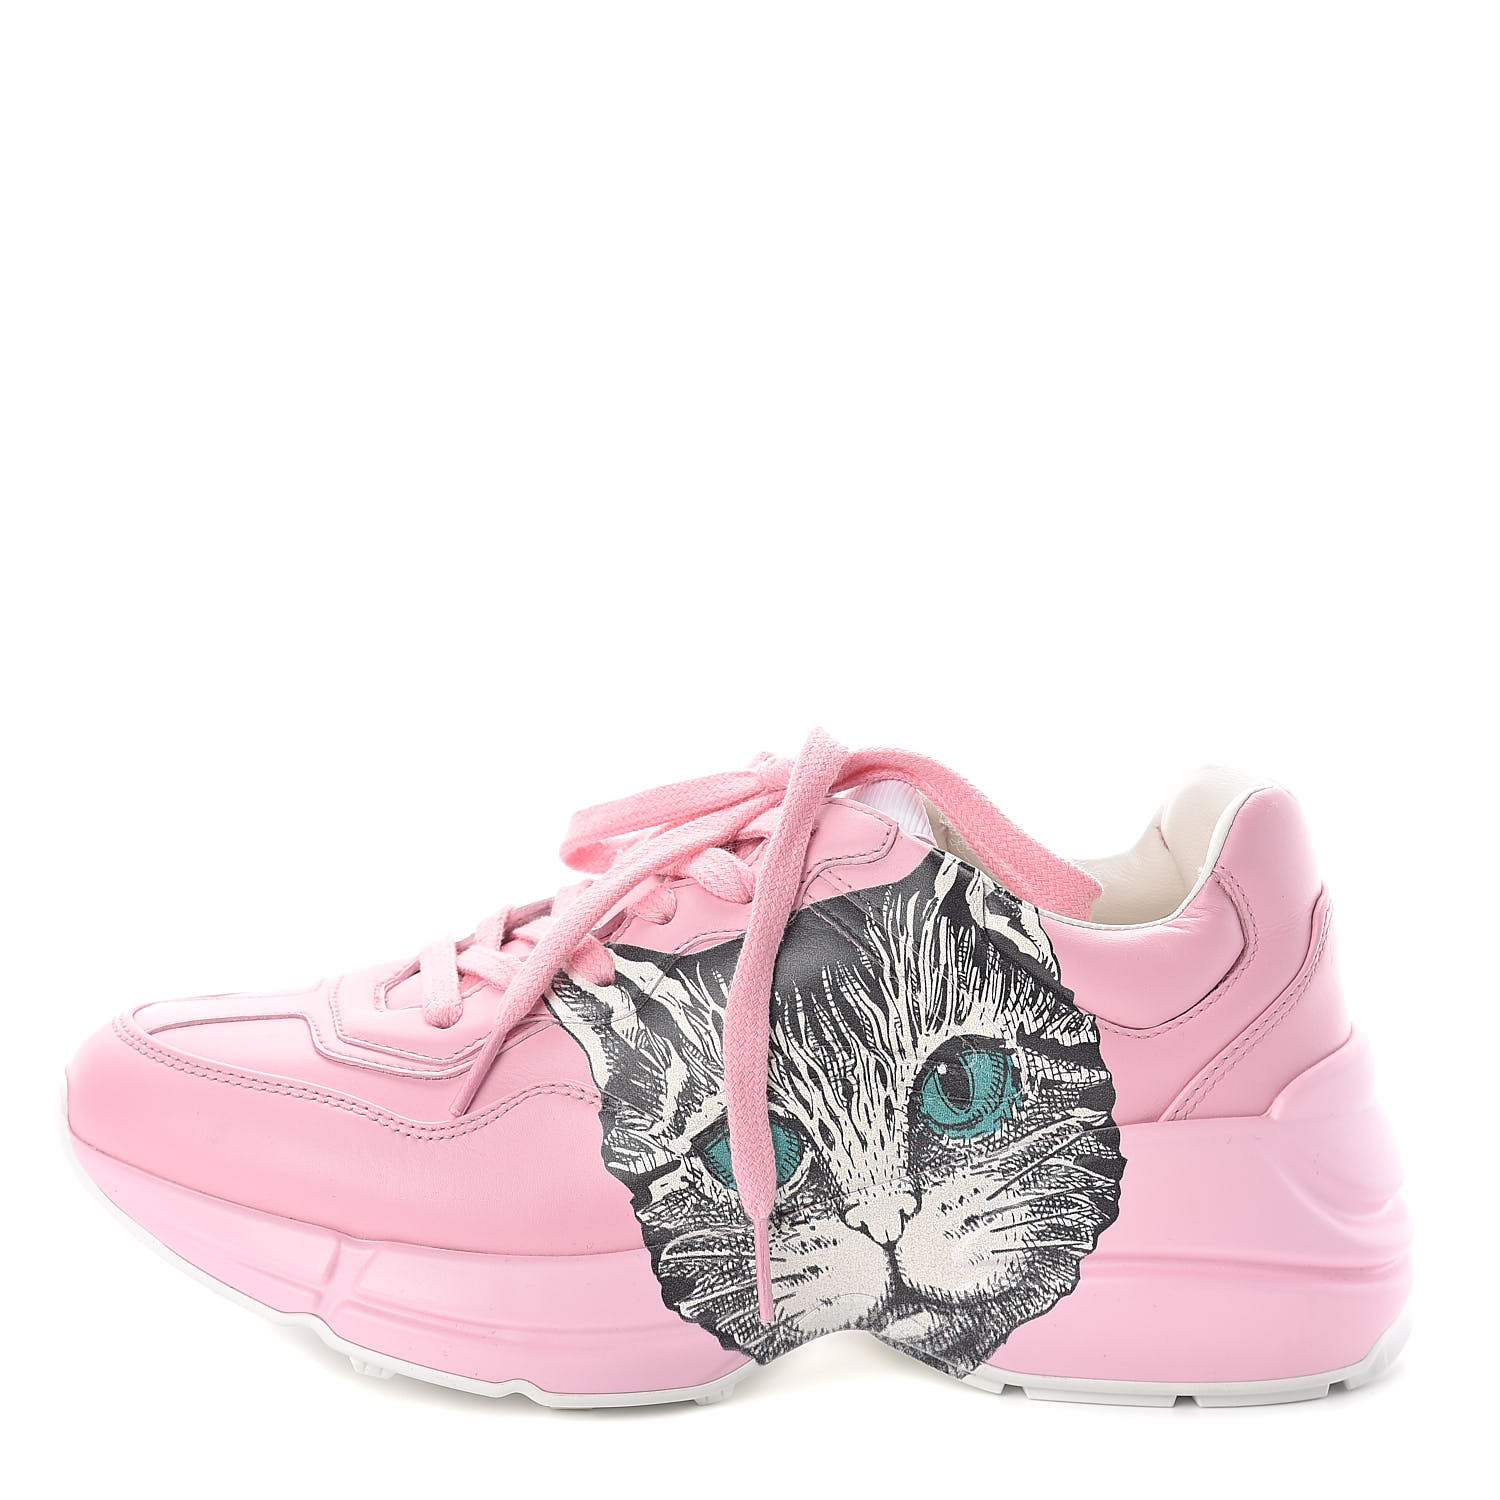 gucci cat shoes